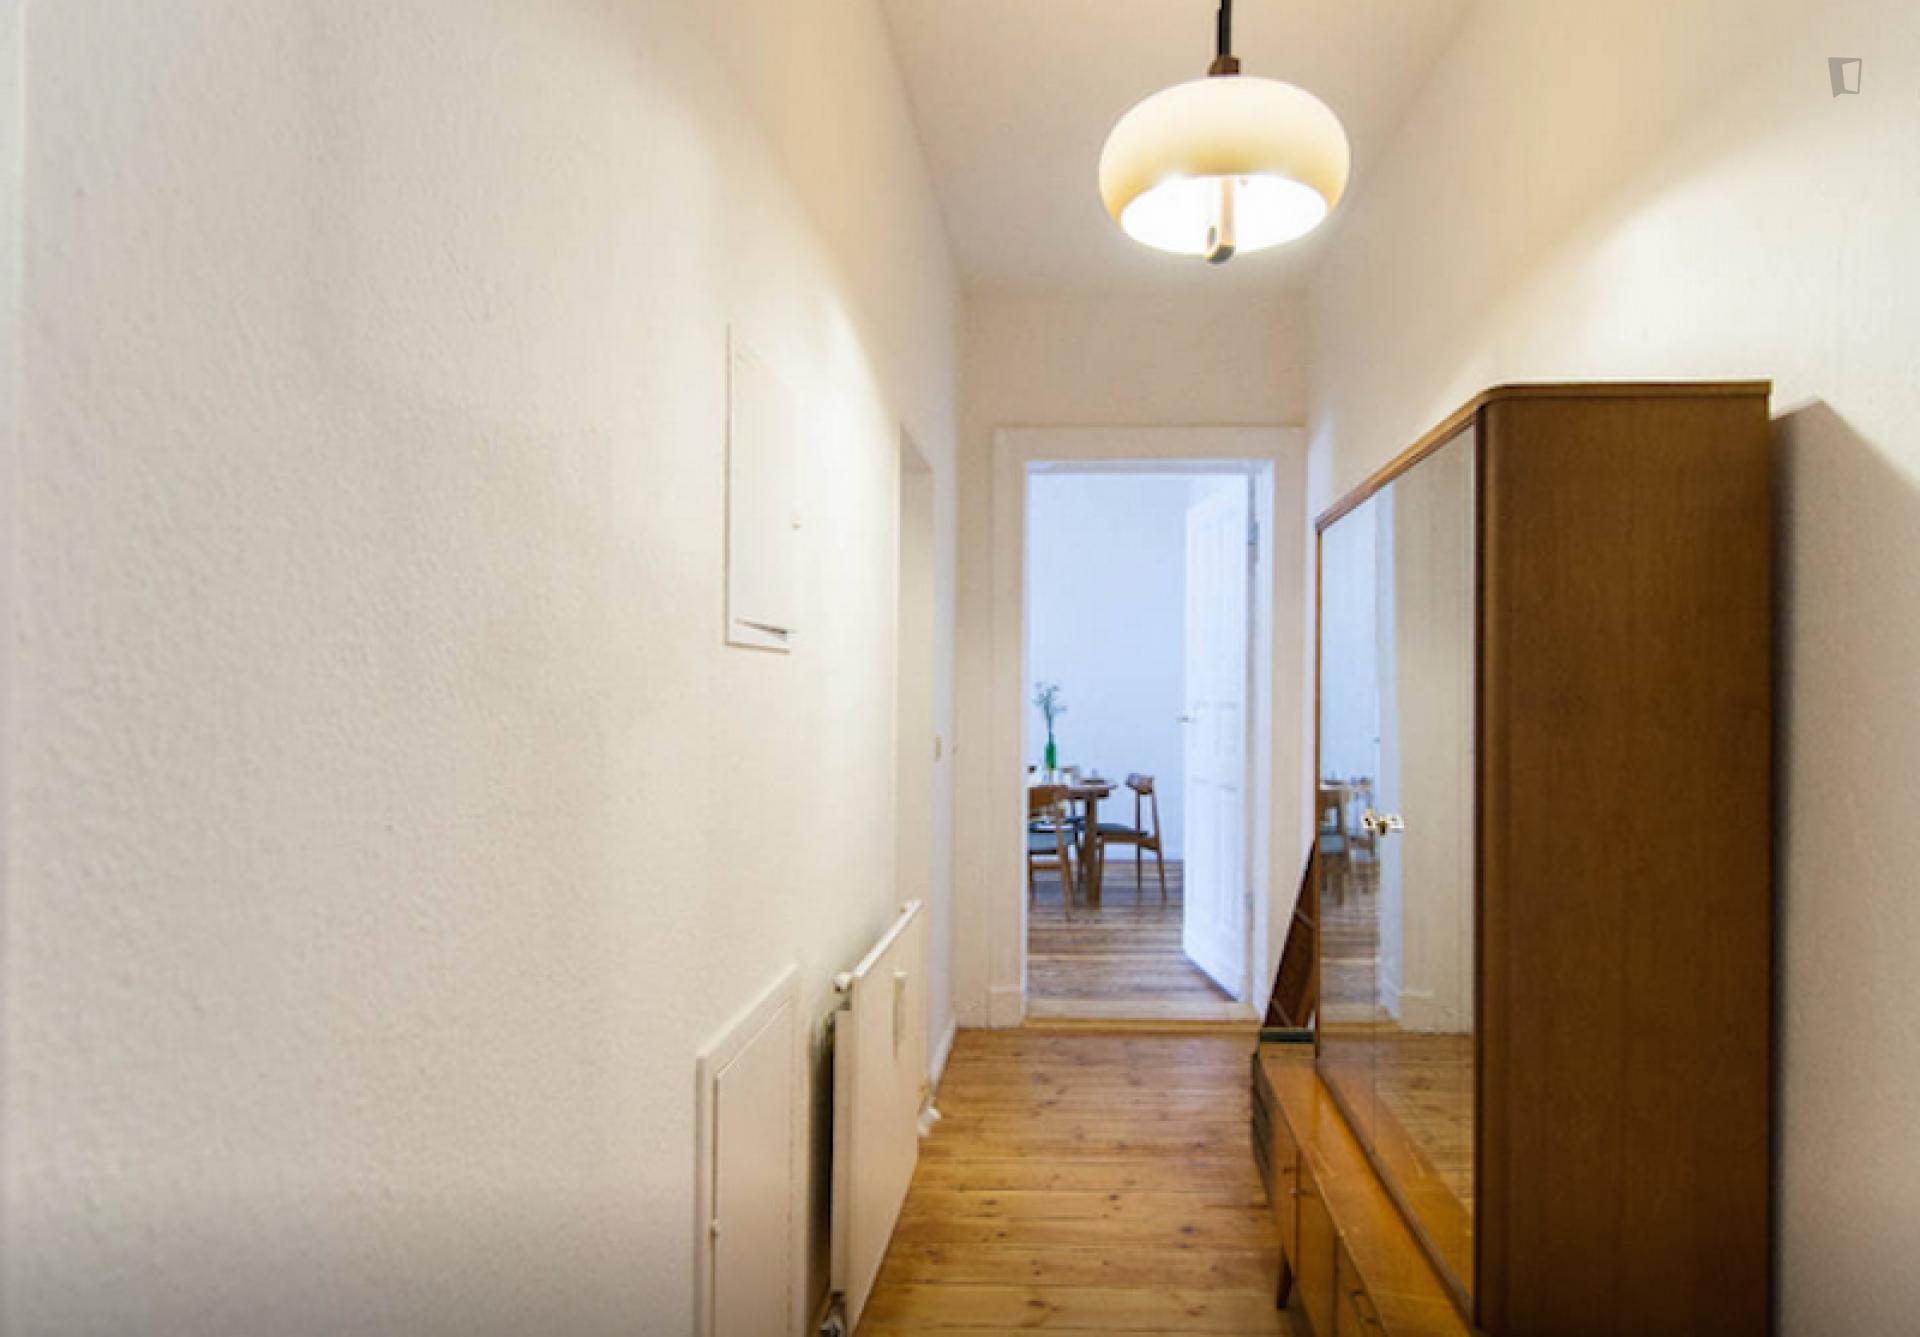 Gorlit - Expat apartment in Berlin